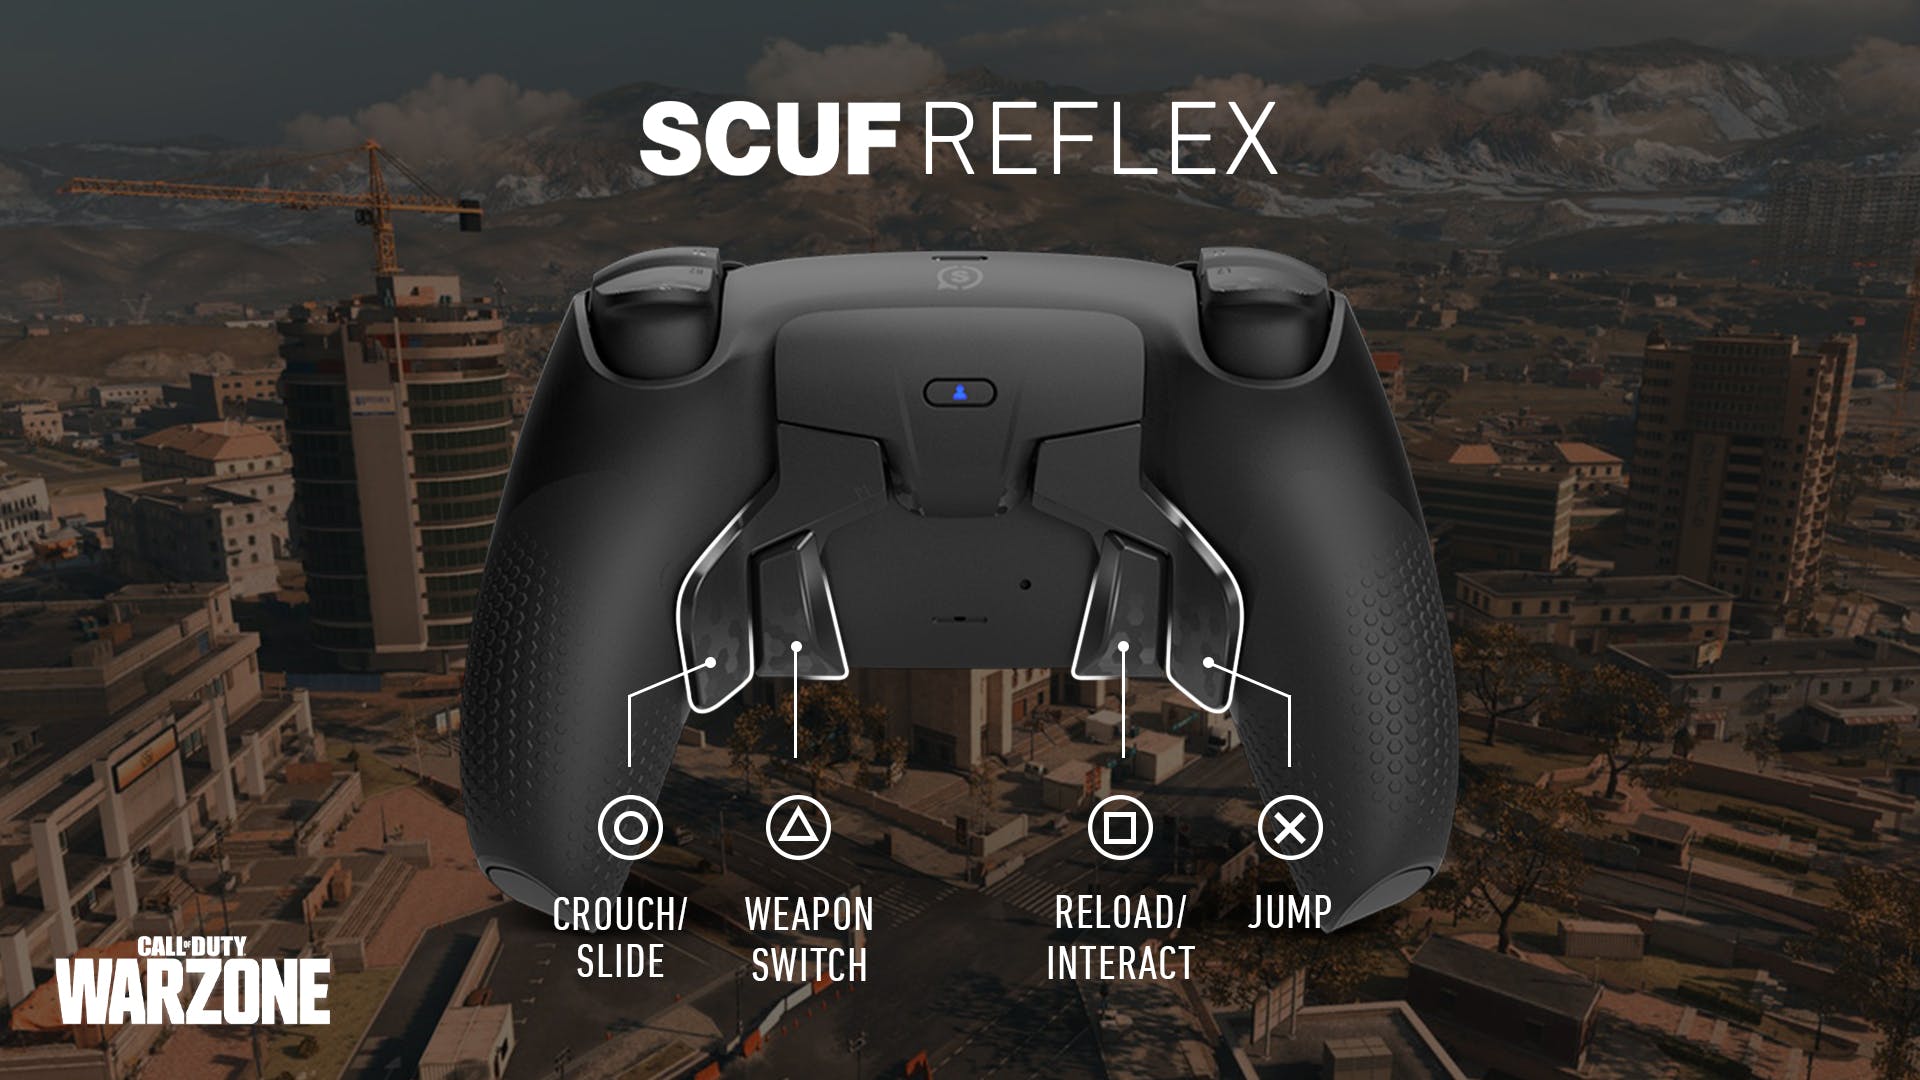 SCUF Reflex COD WARZONE Xbox One Controller Setup